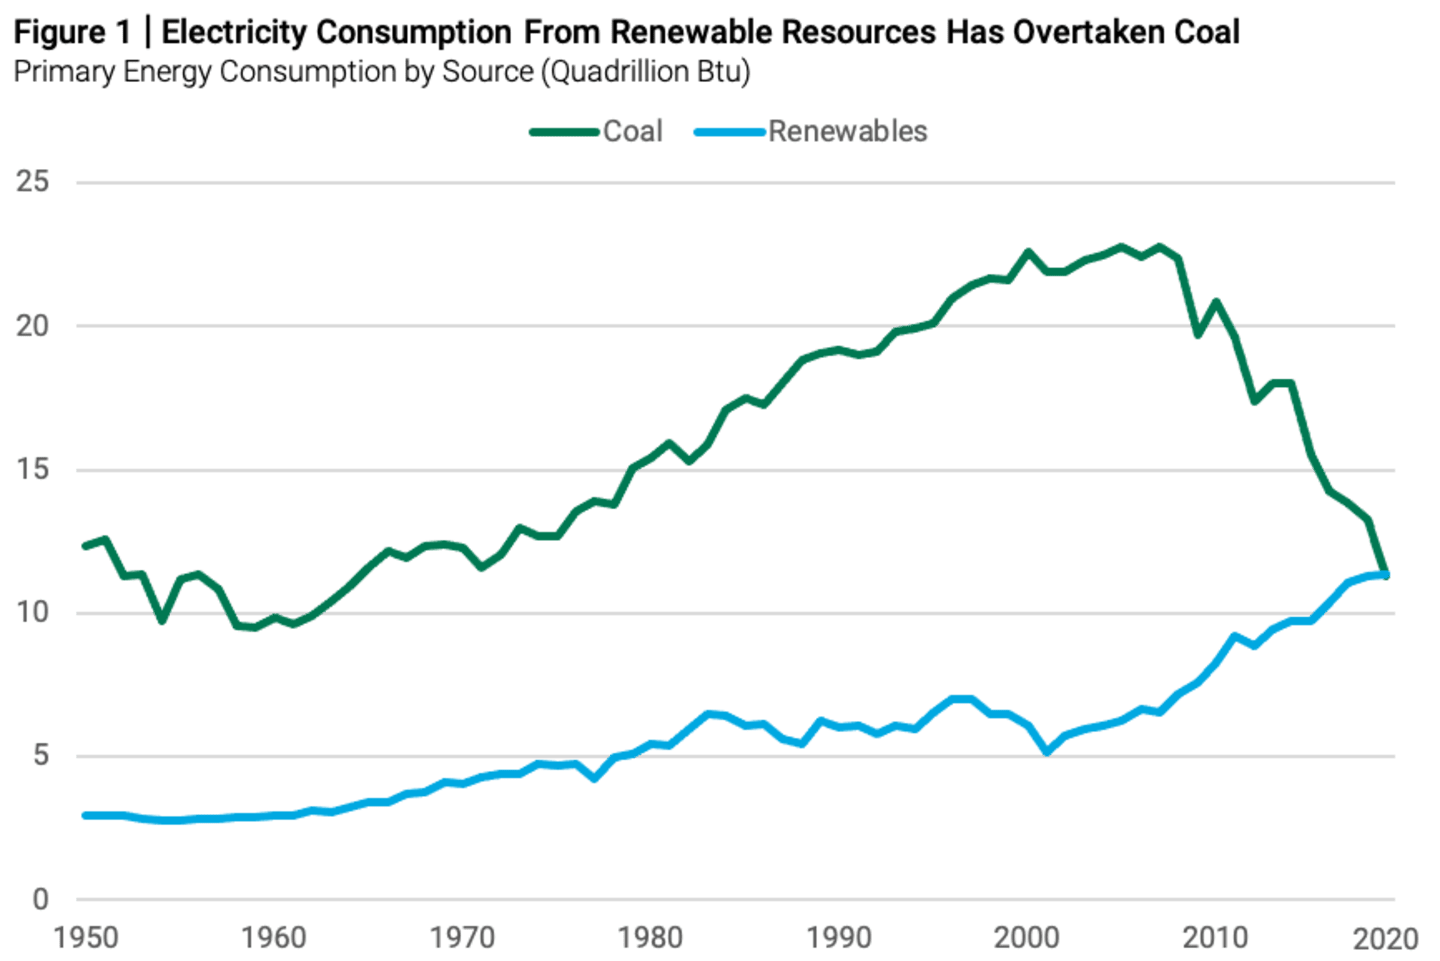 Electricity consumption from renewable resources has overtaken coal.